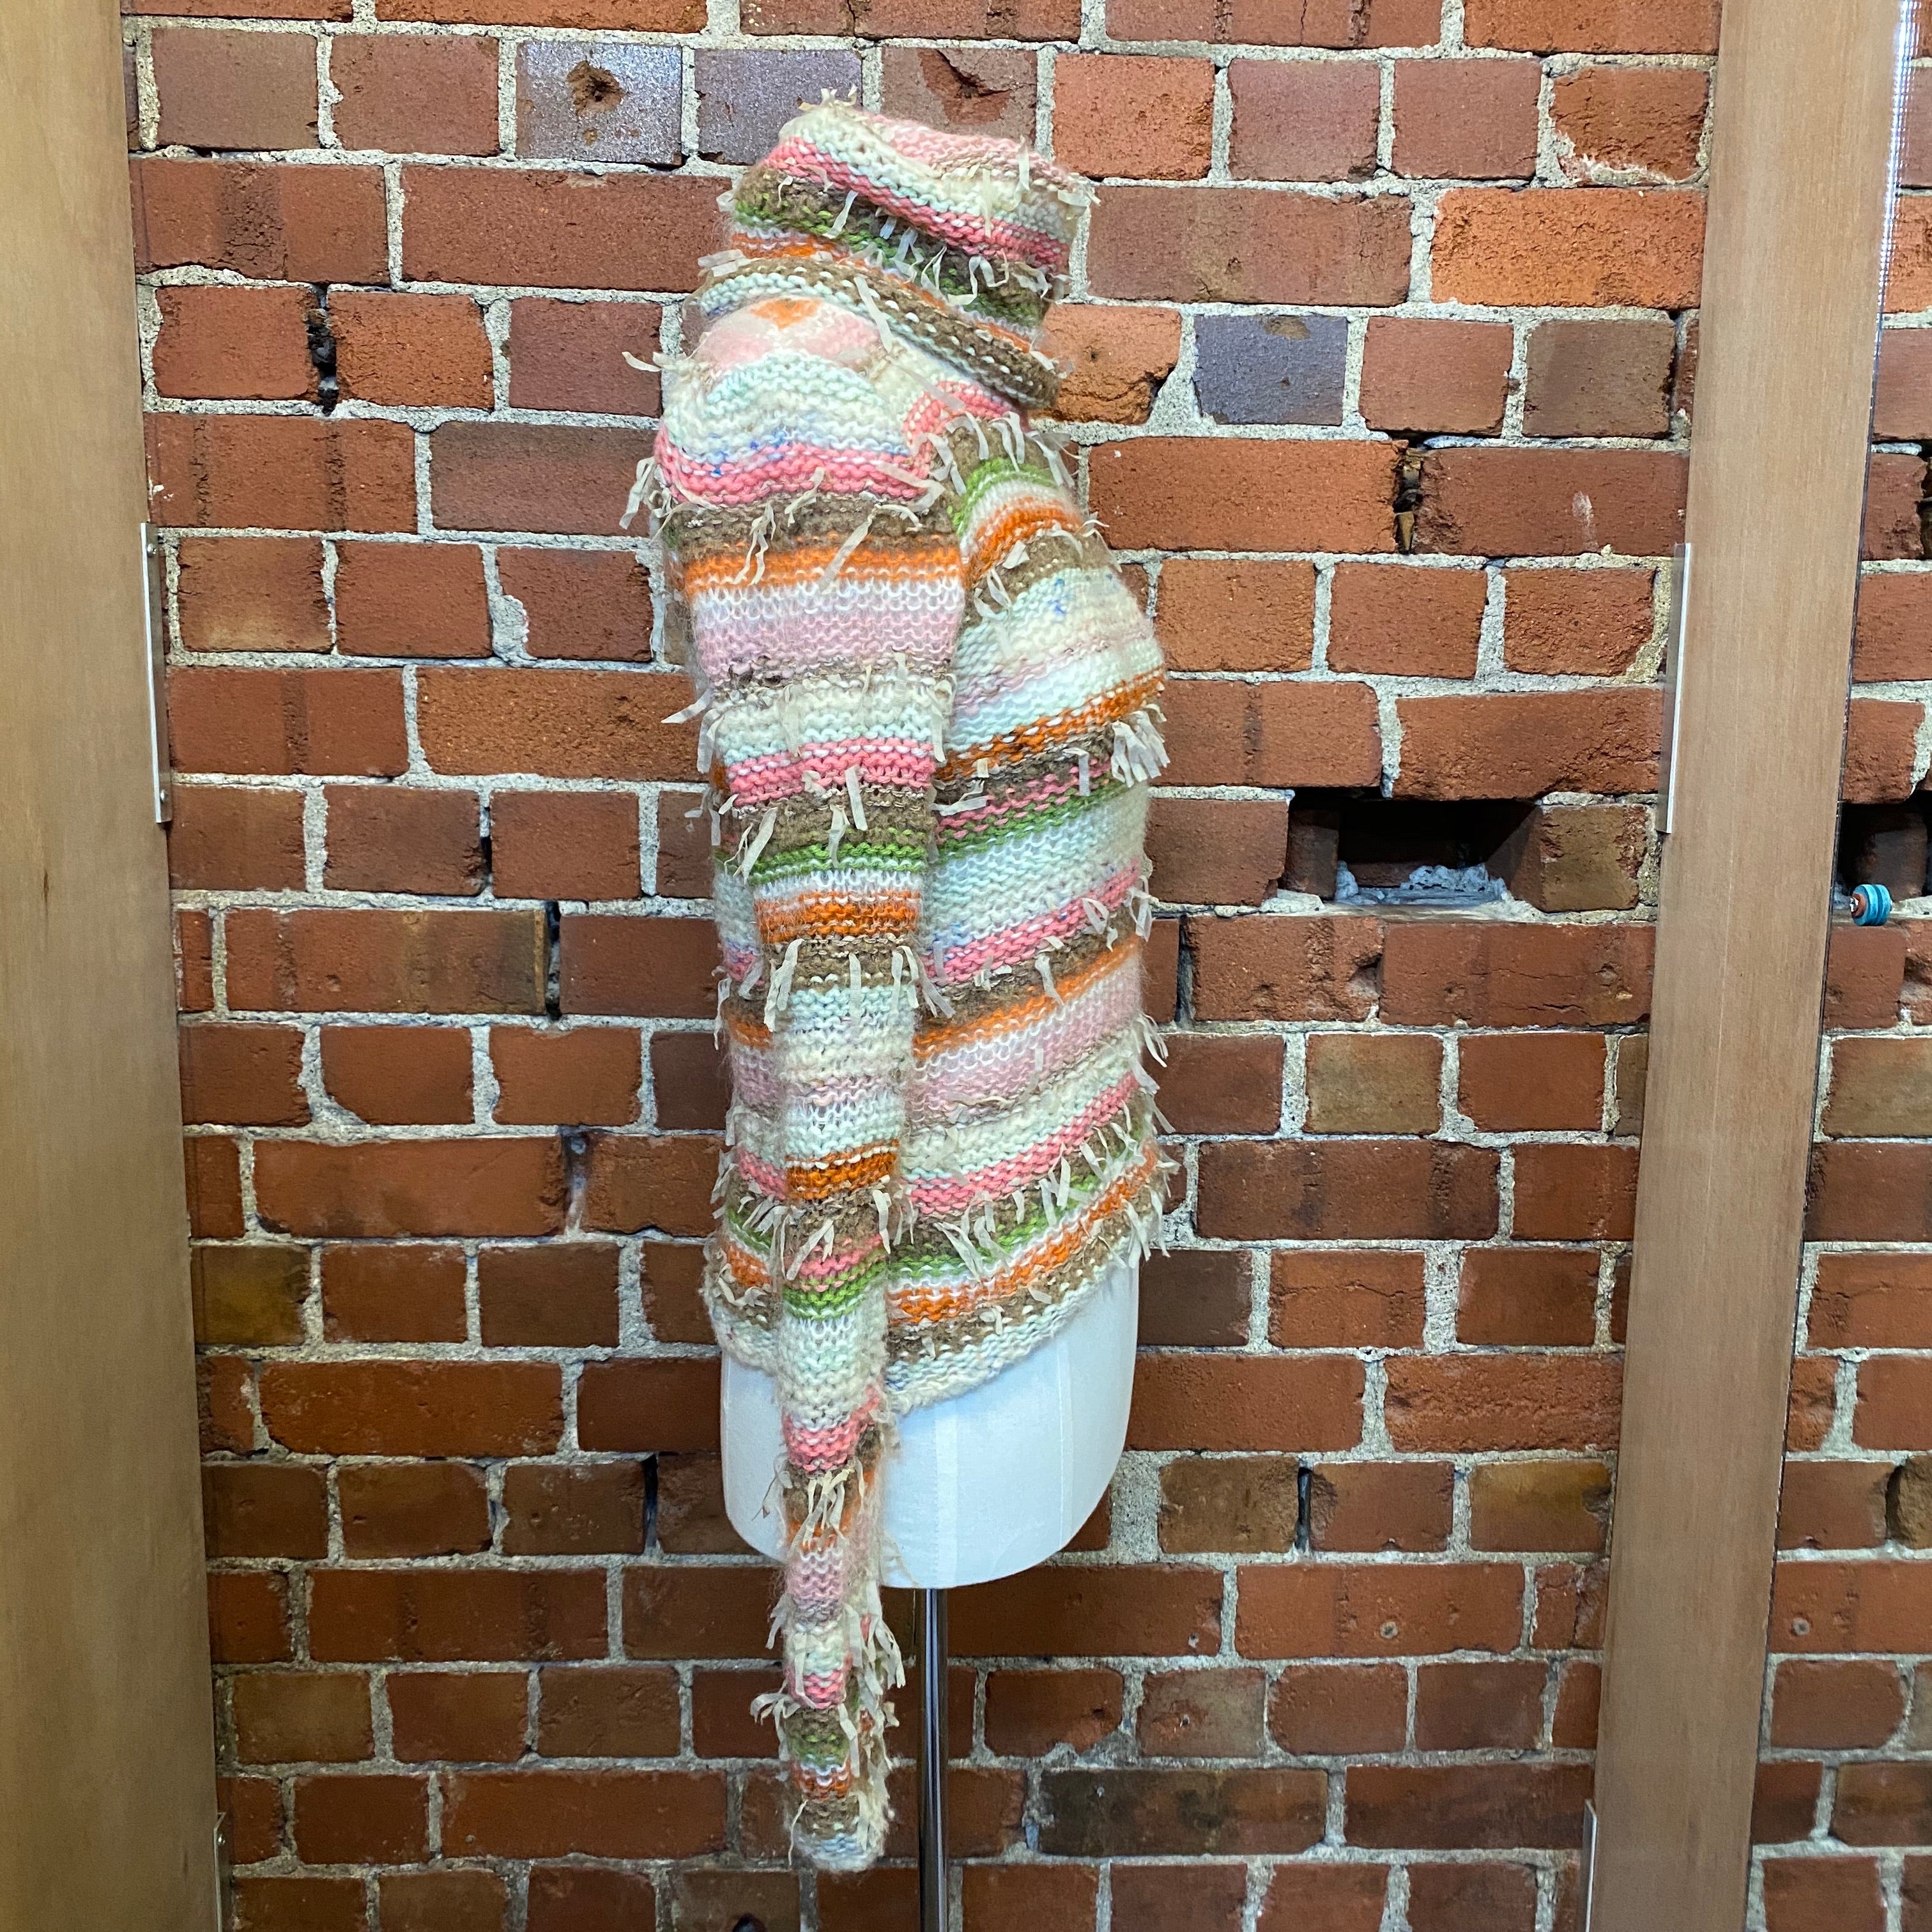 MOSCHINO 1990s wool jumper